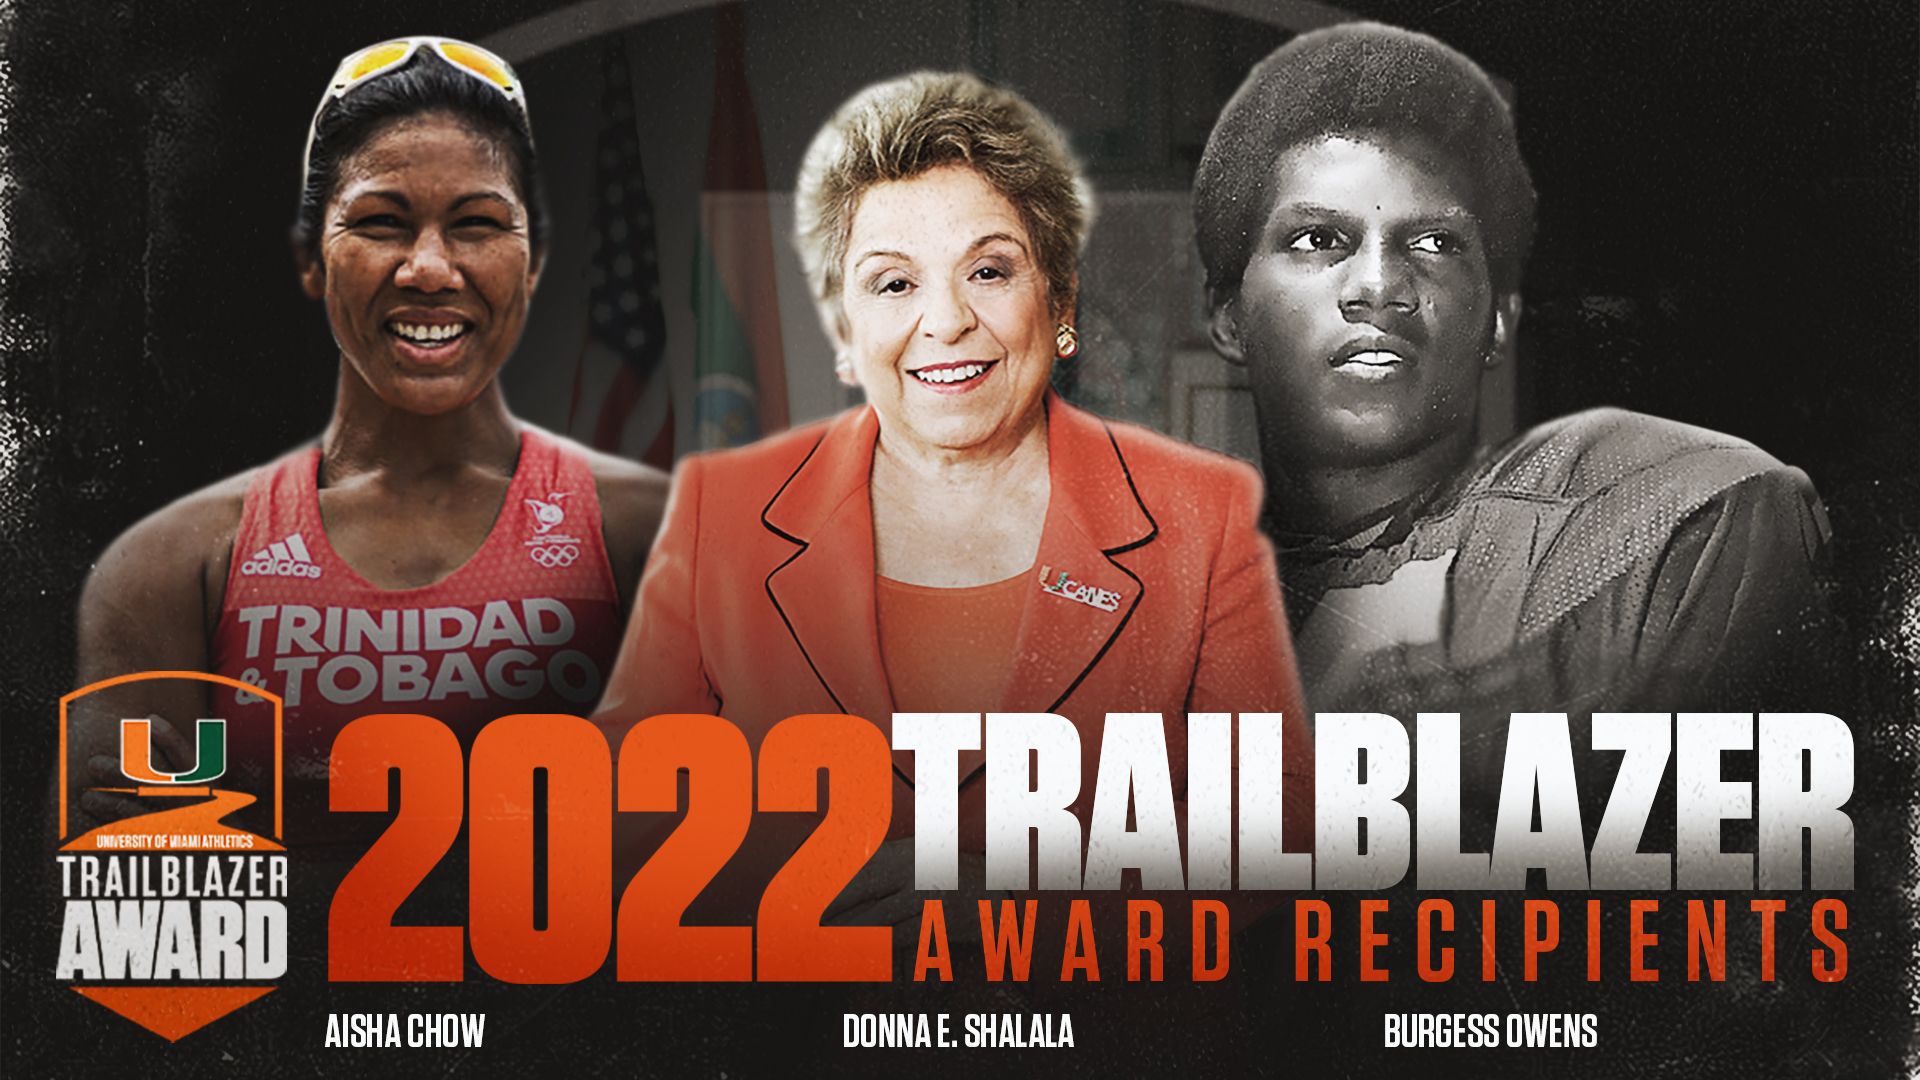 University of Miami Announces 2022 Athletics Trailblazer Award Winners